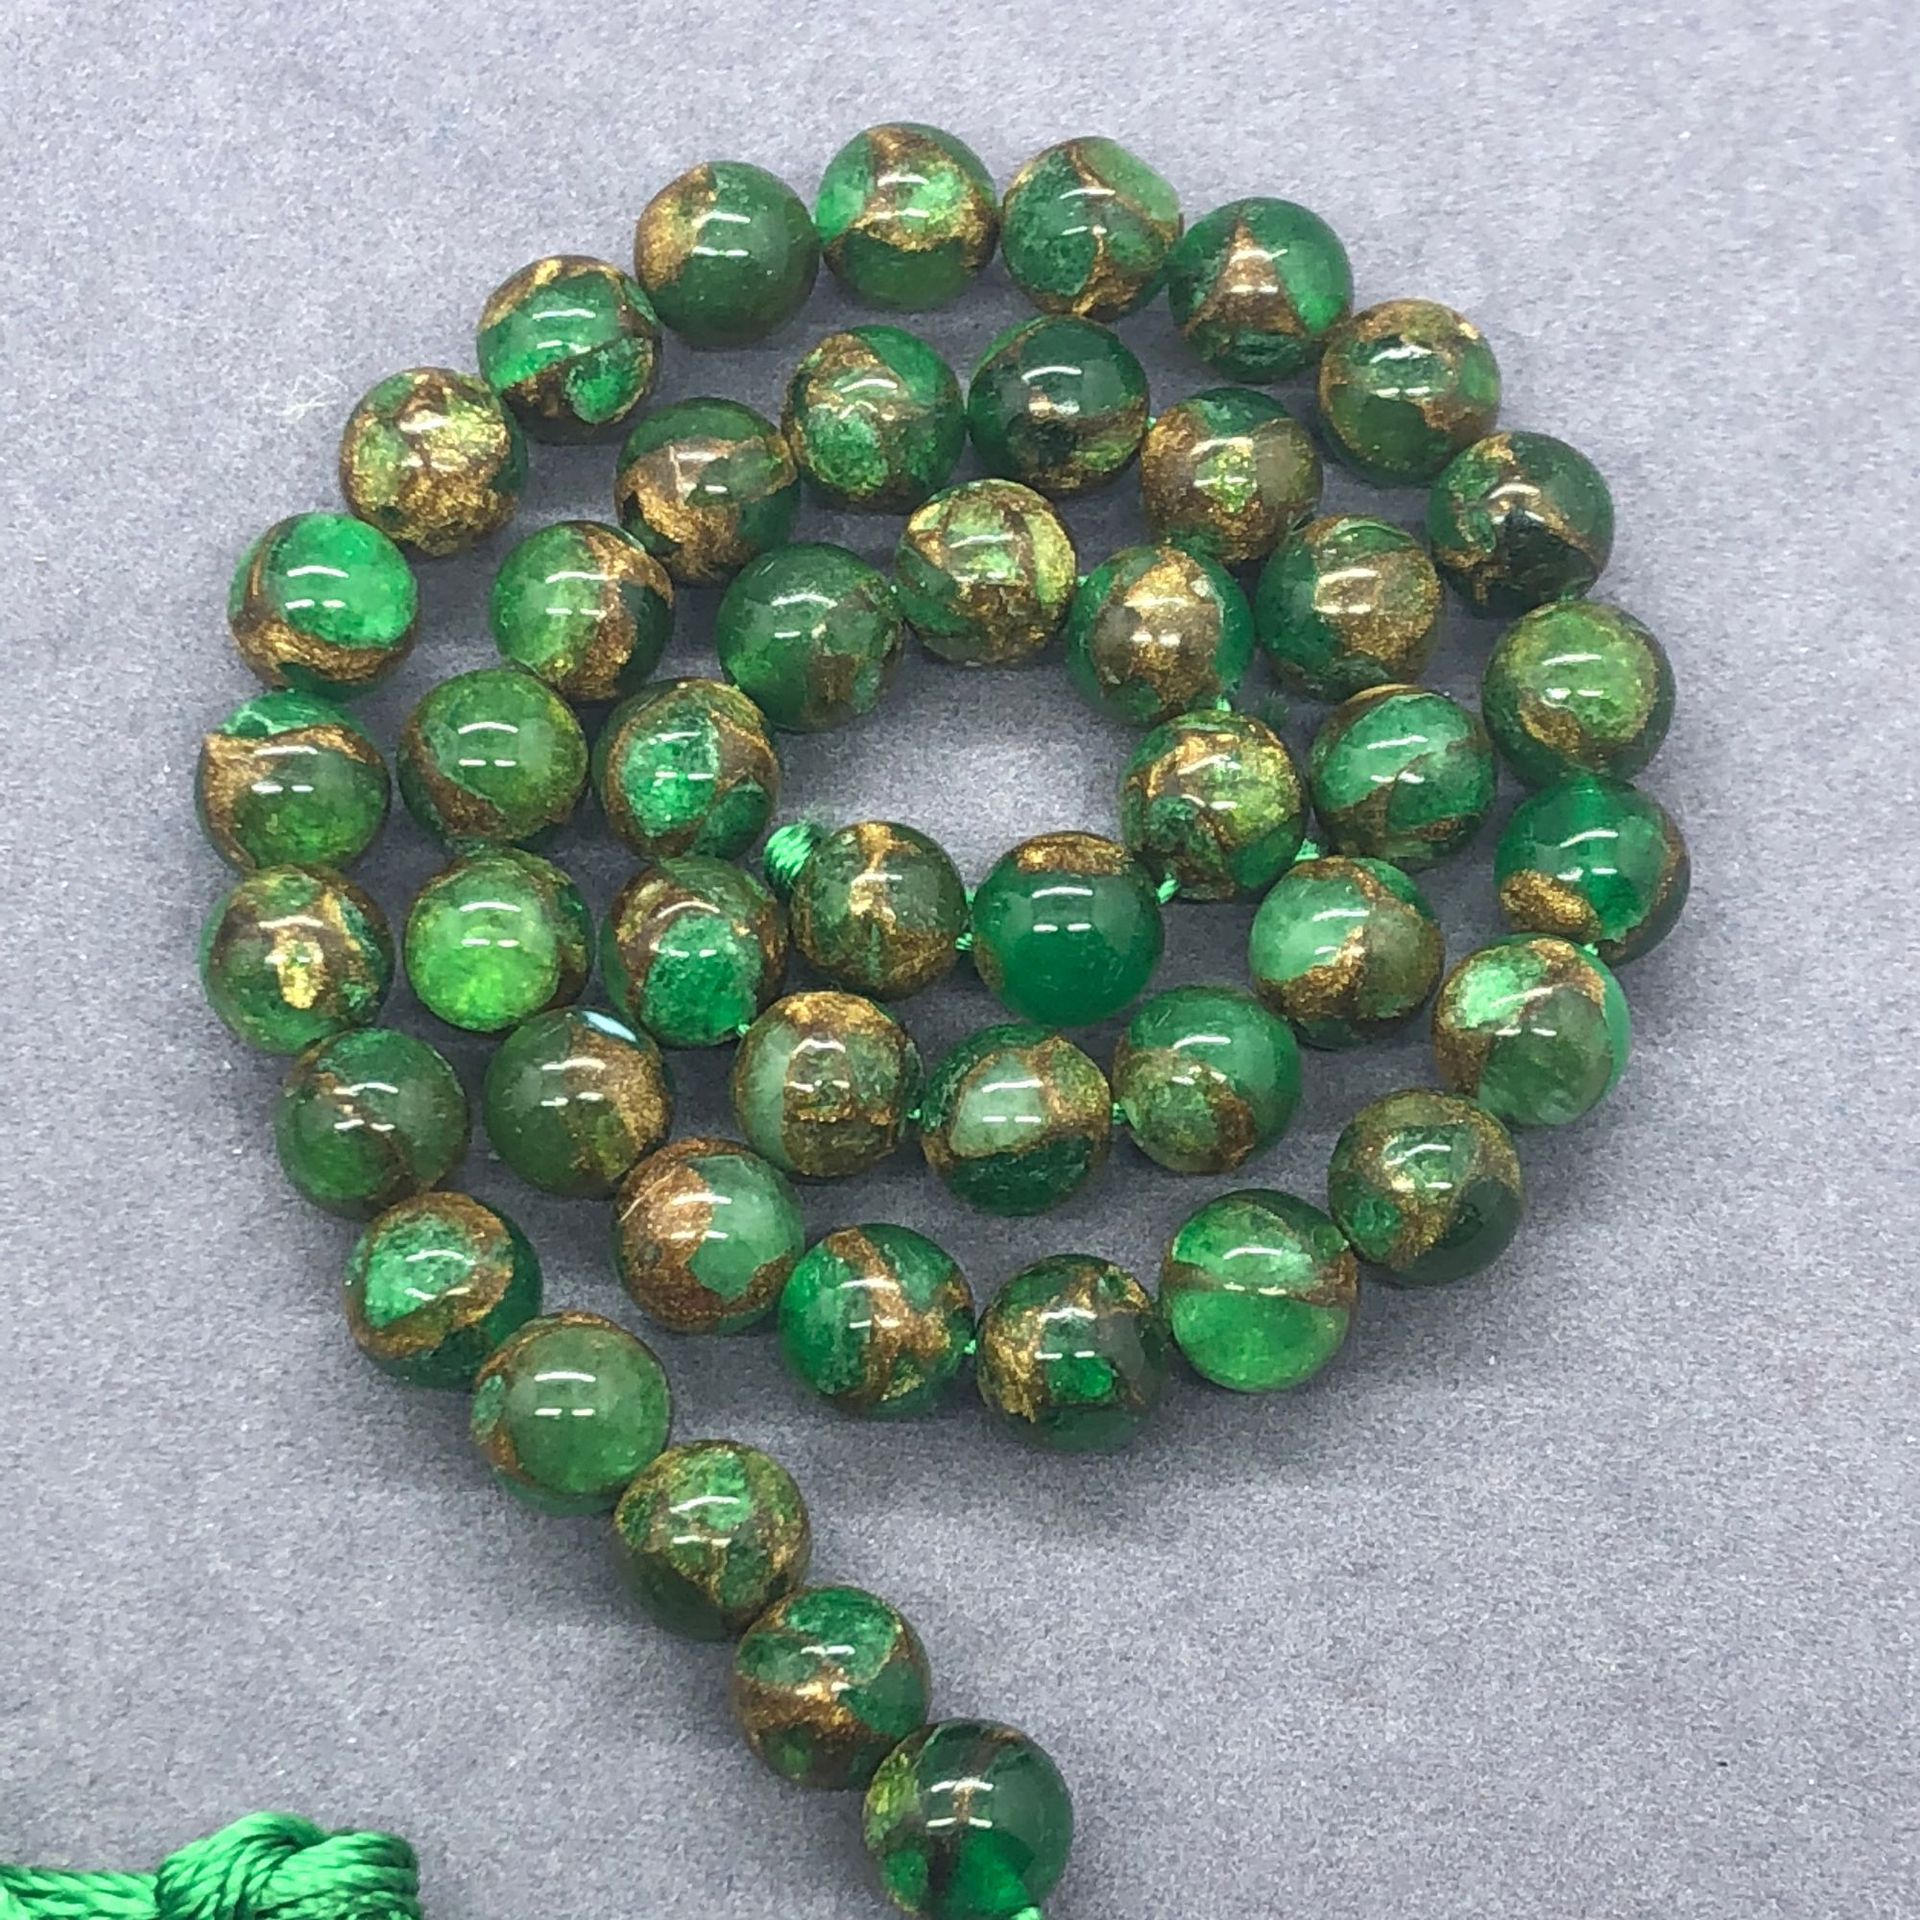 No. 3 green 8mm (≈47 pieces)